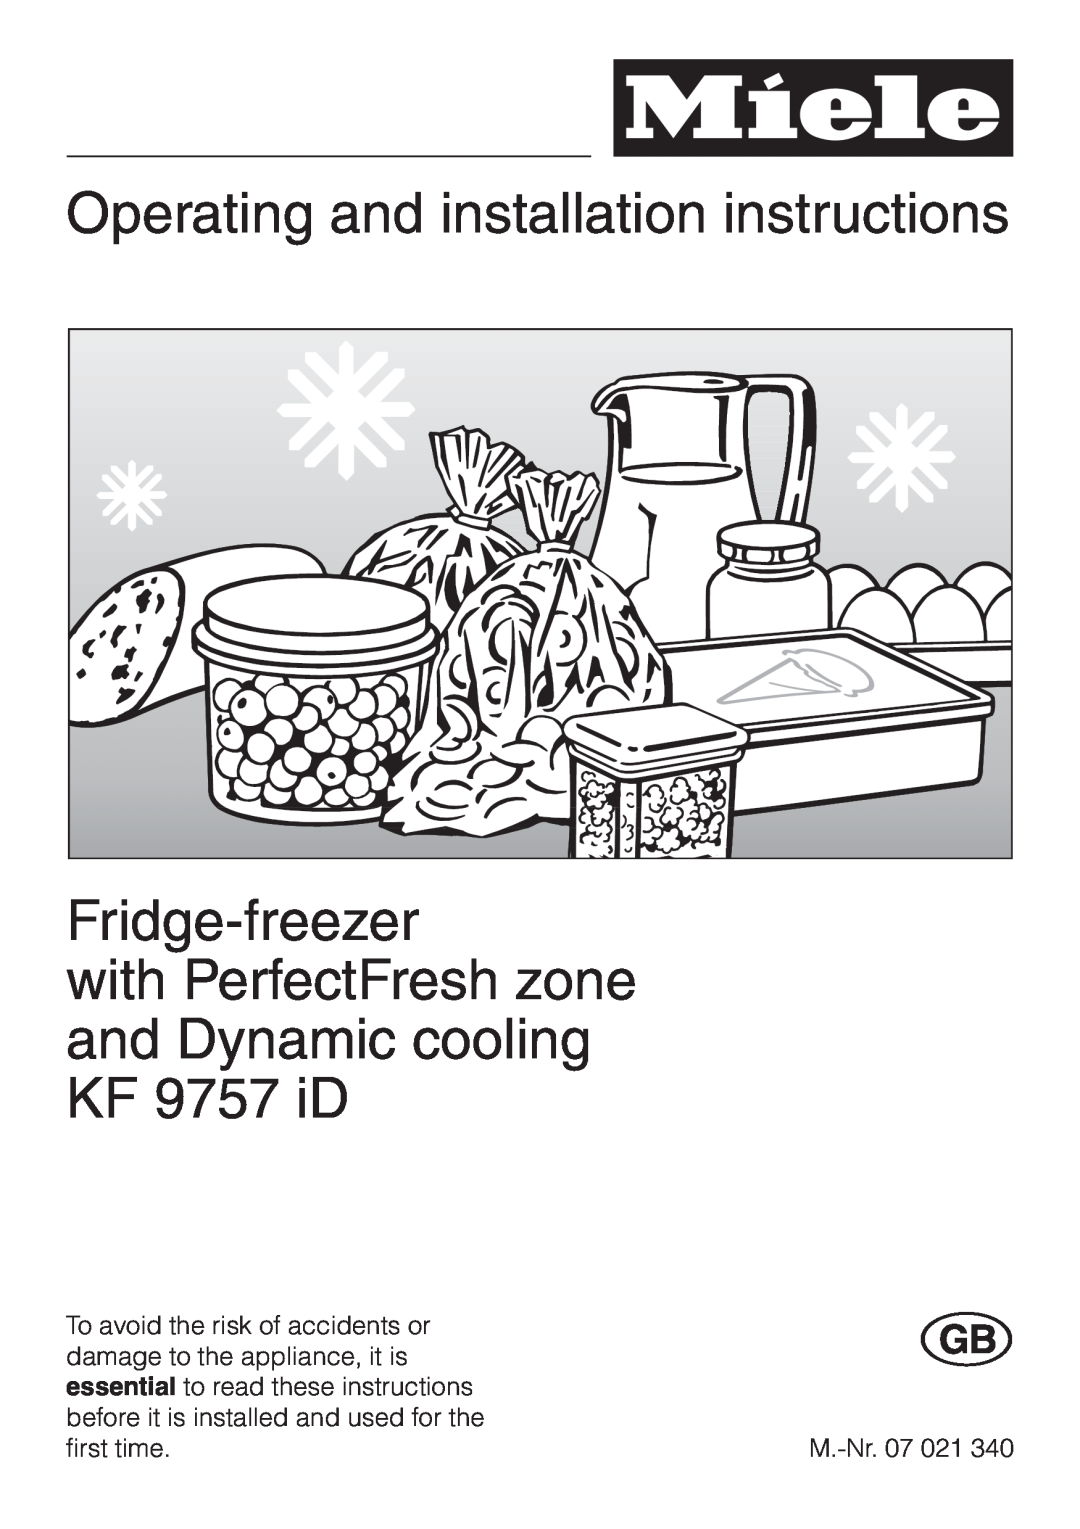 Miele KF 9757 ID installation instructions Operating and installation instructions, Fridge-freezer 